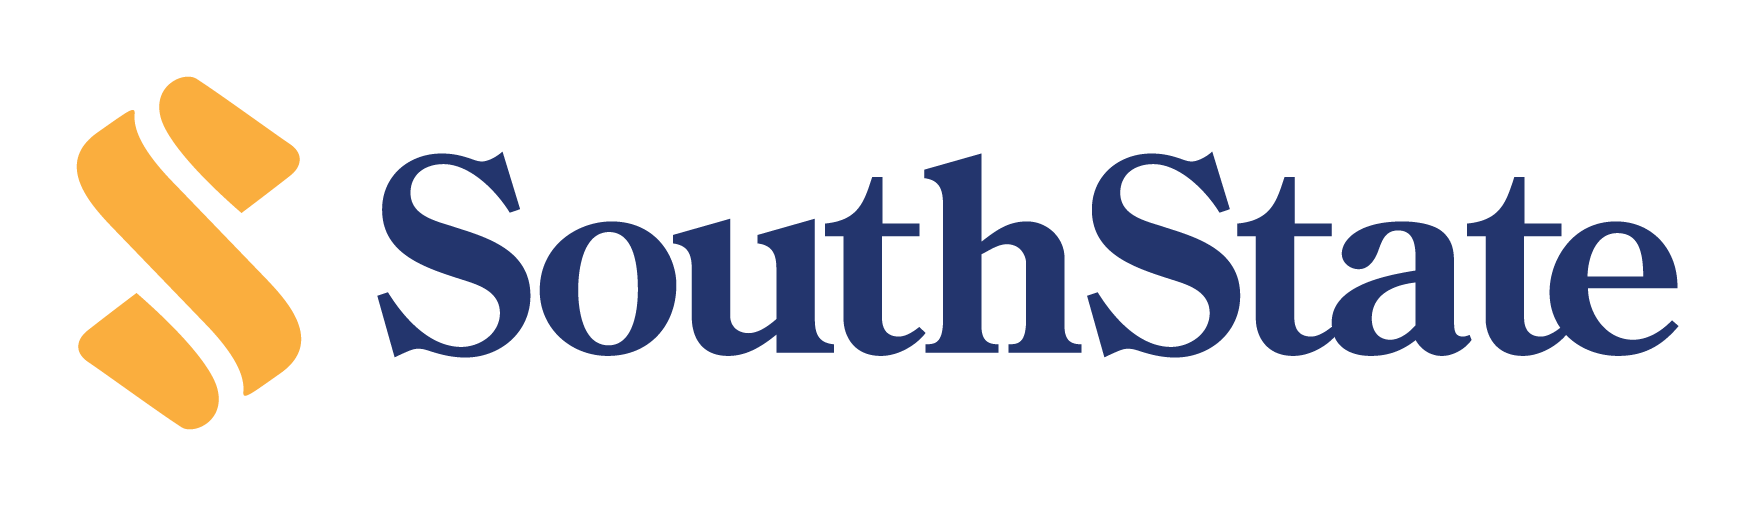 South State Bank Logo - Mobile